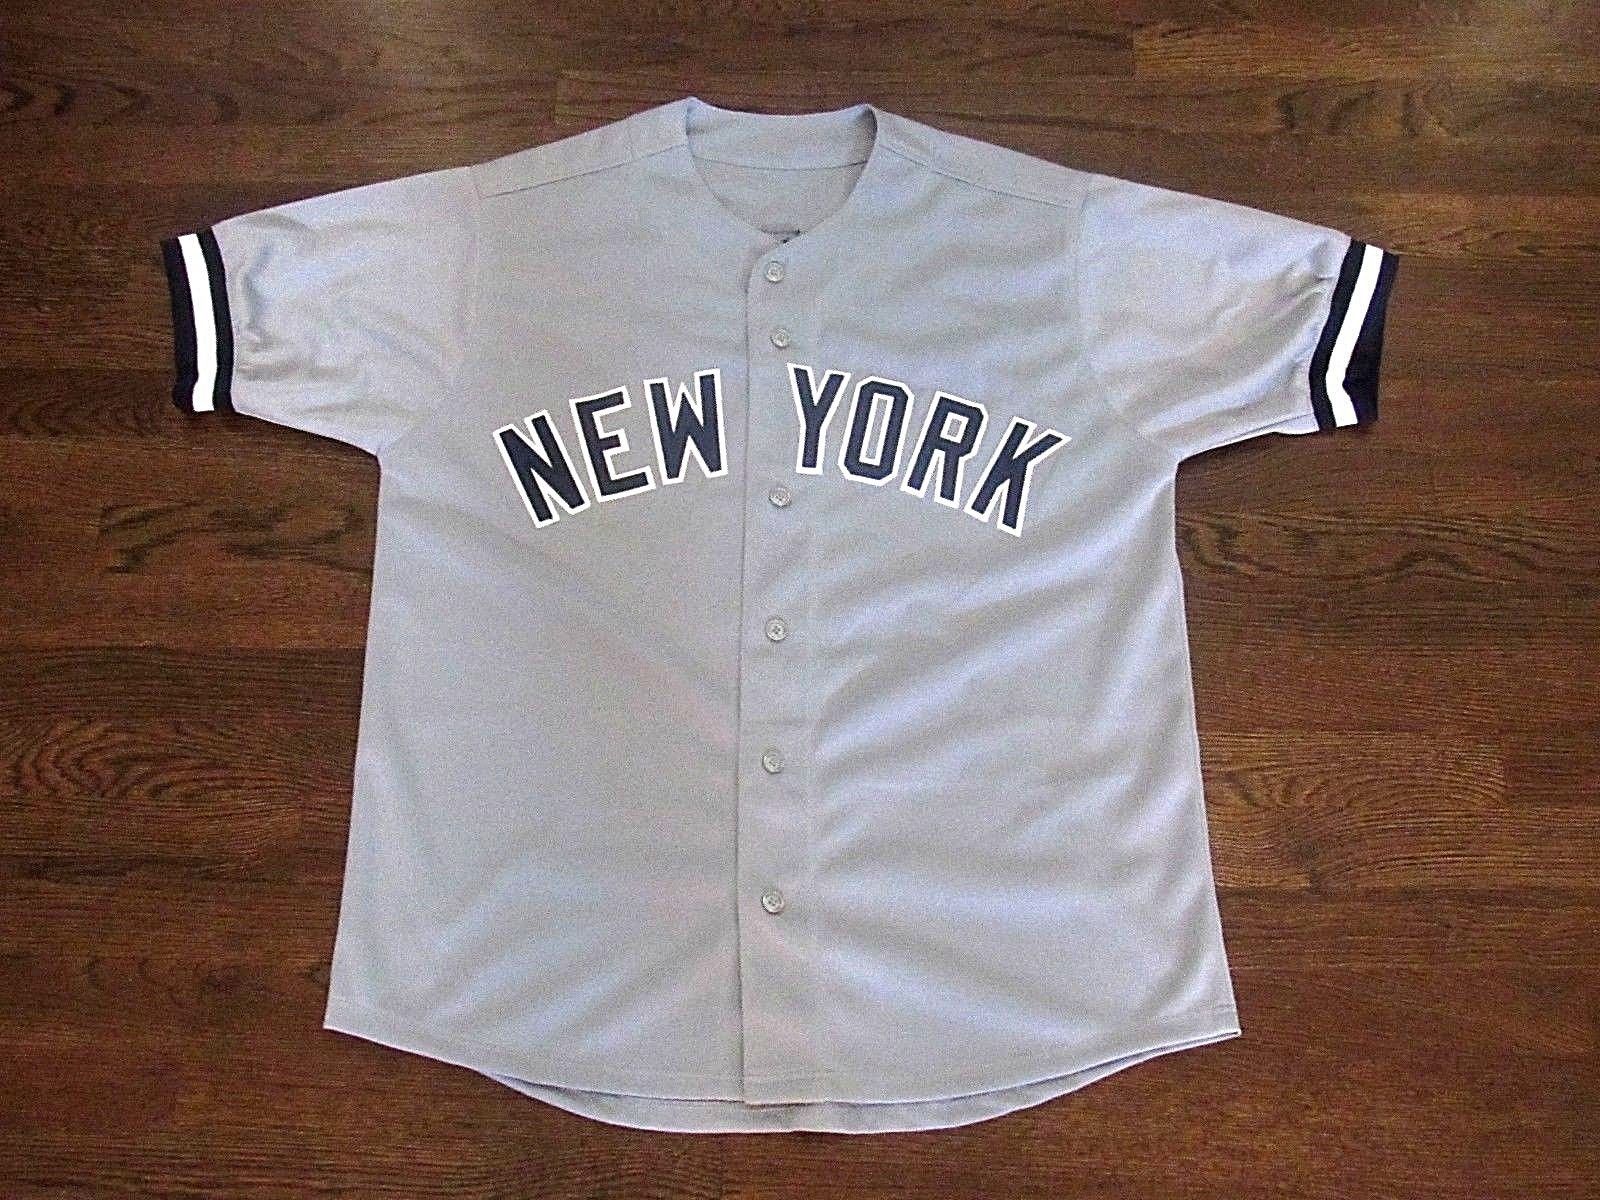 Graig Nettles 1977-78 Wsc New York Yankees and 50 similar items